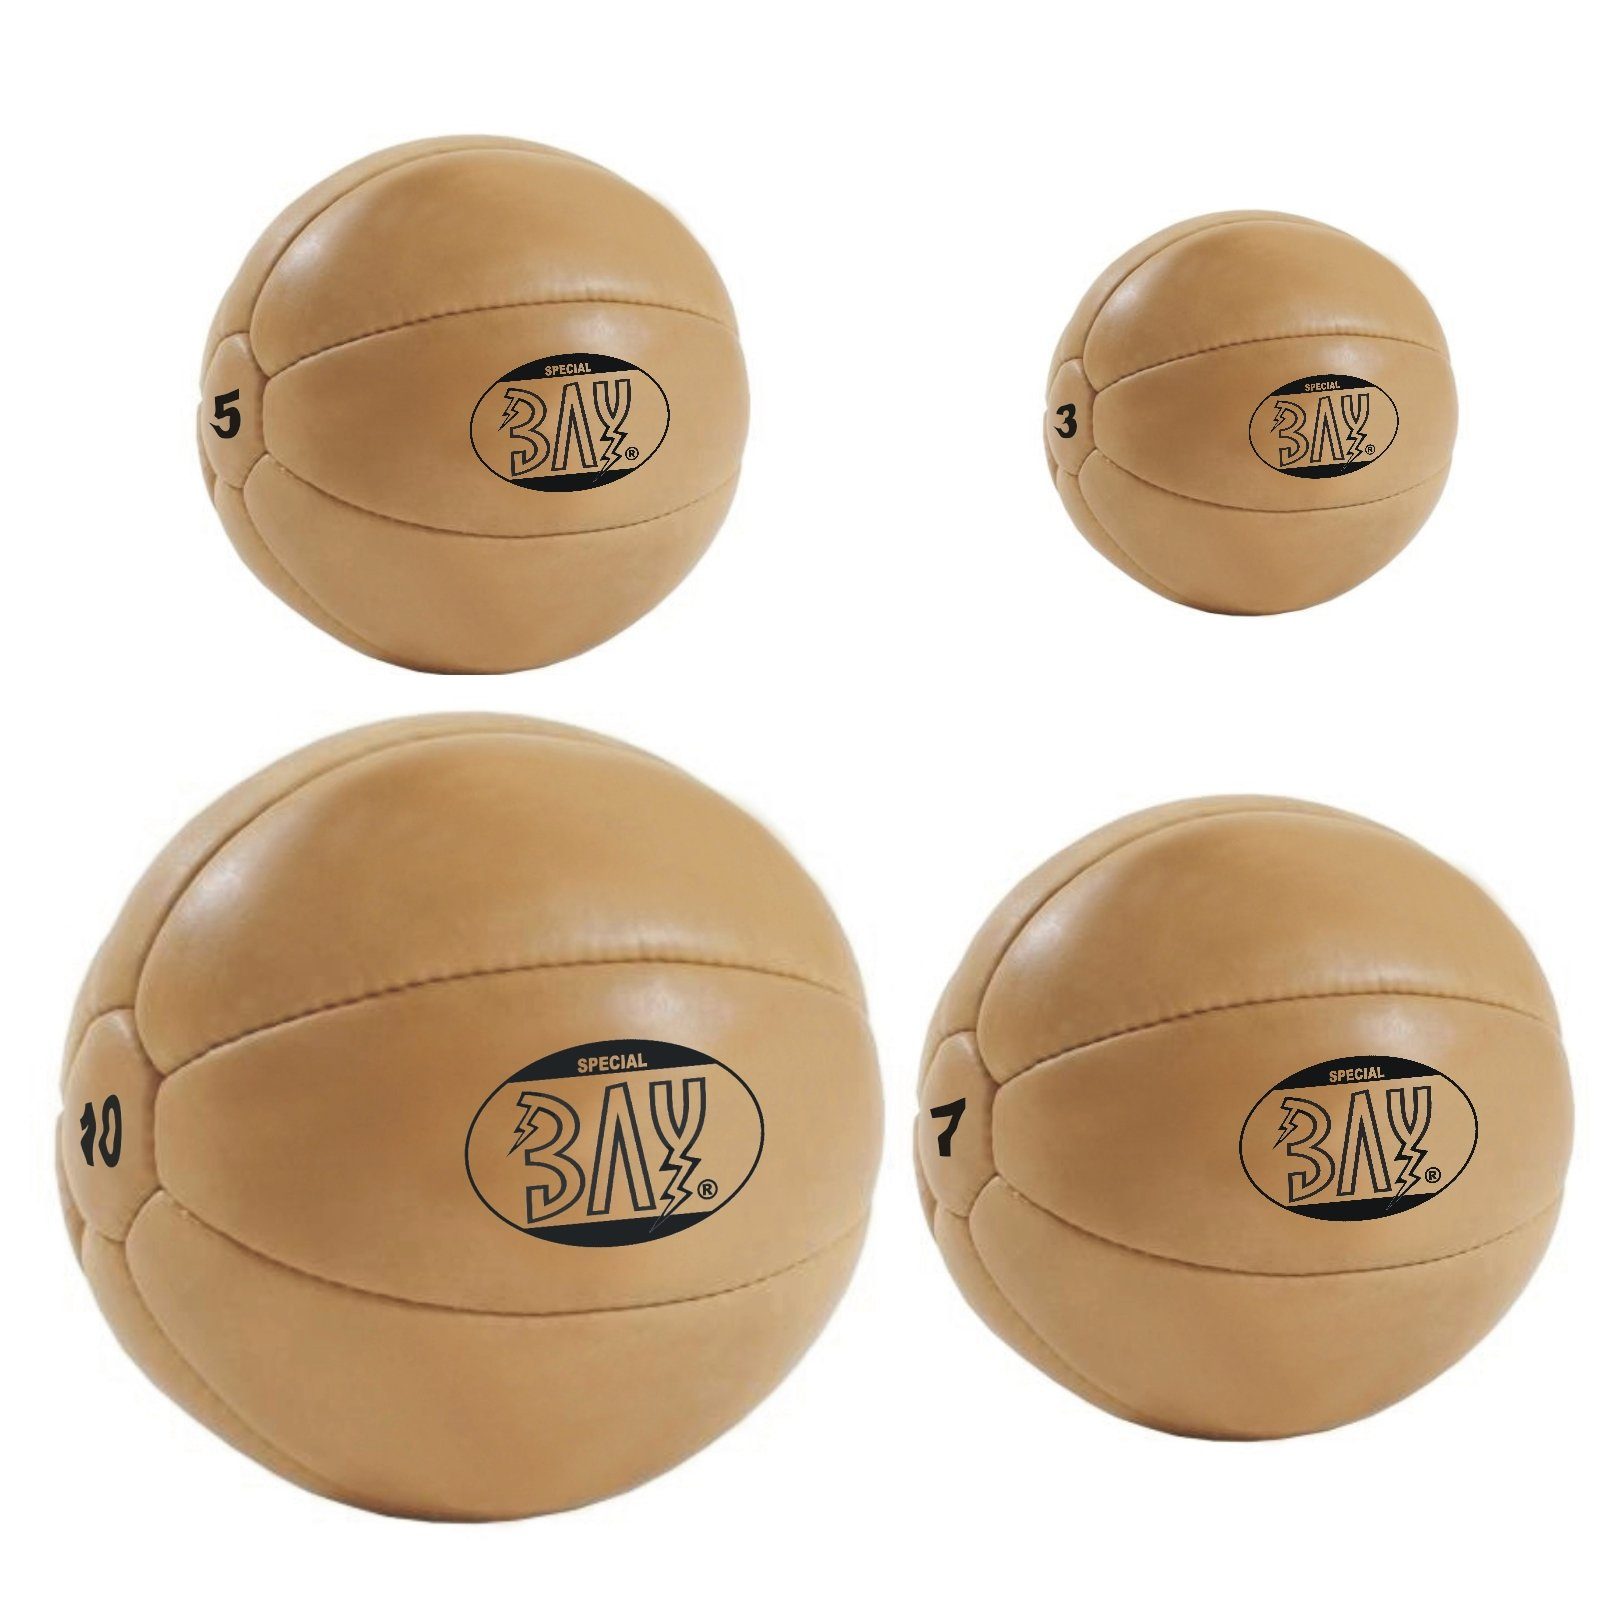 BAY-Sports Medizinball 3 braun 3kg Trainingsball Ausführung Vollball Kunstleder Kraftball, kg natur Kraftsport Profi Fitnessball klassische